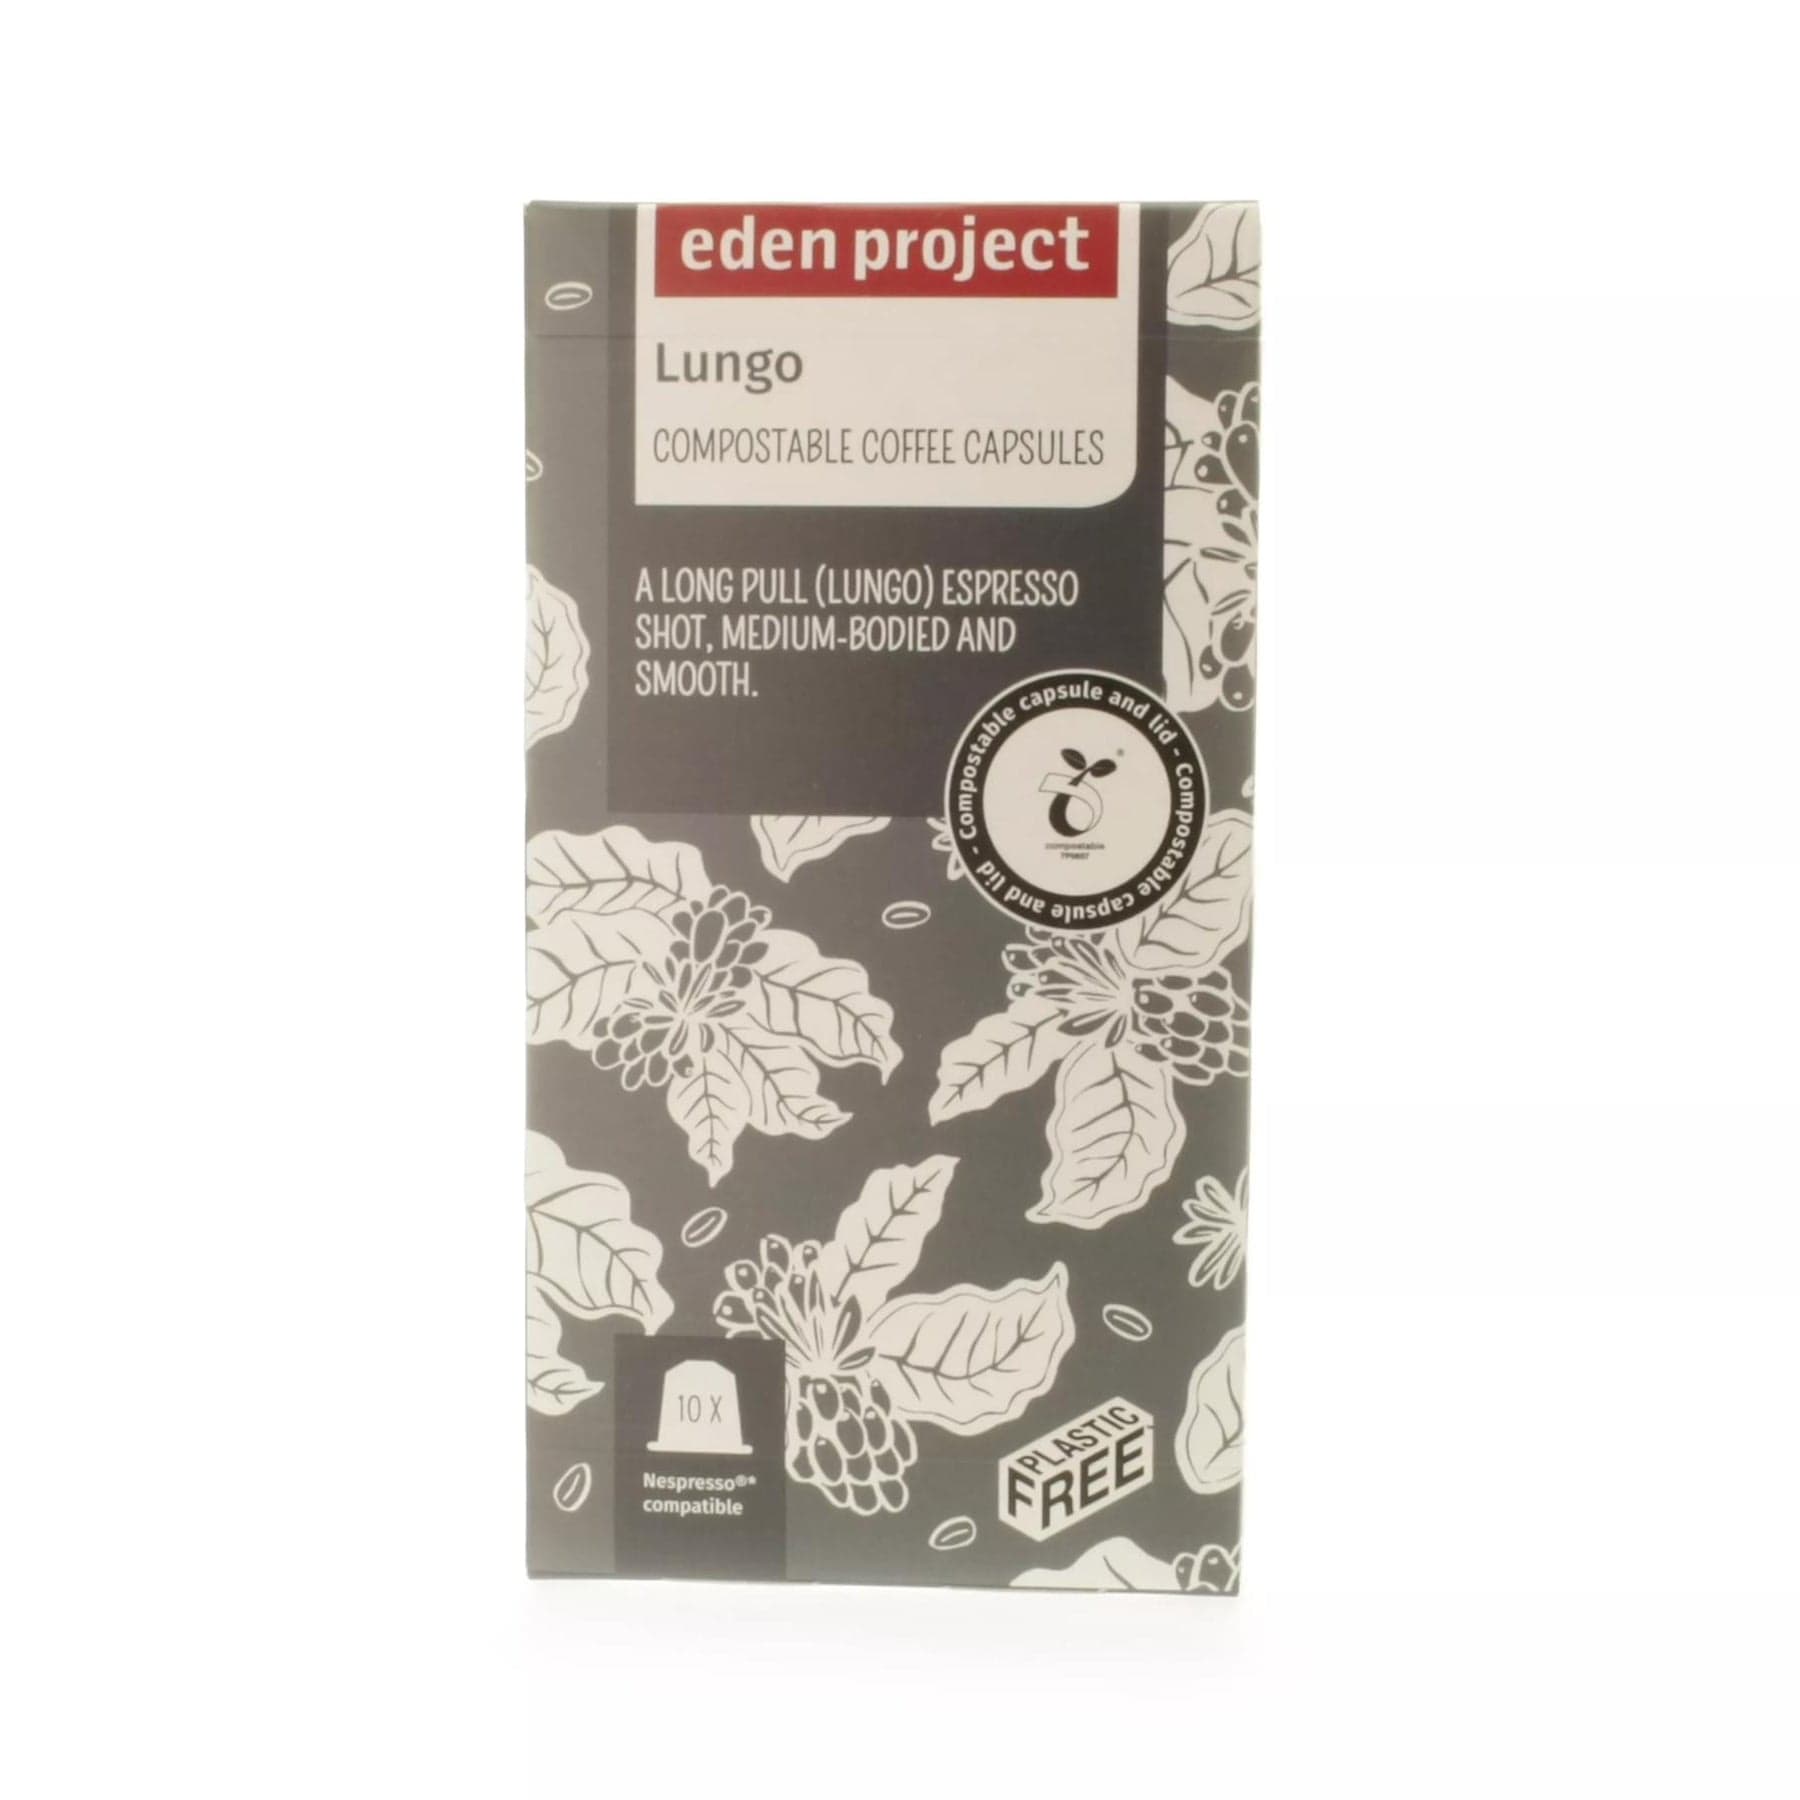 10 Lungo biodegradable coffee capsules